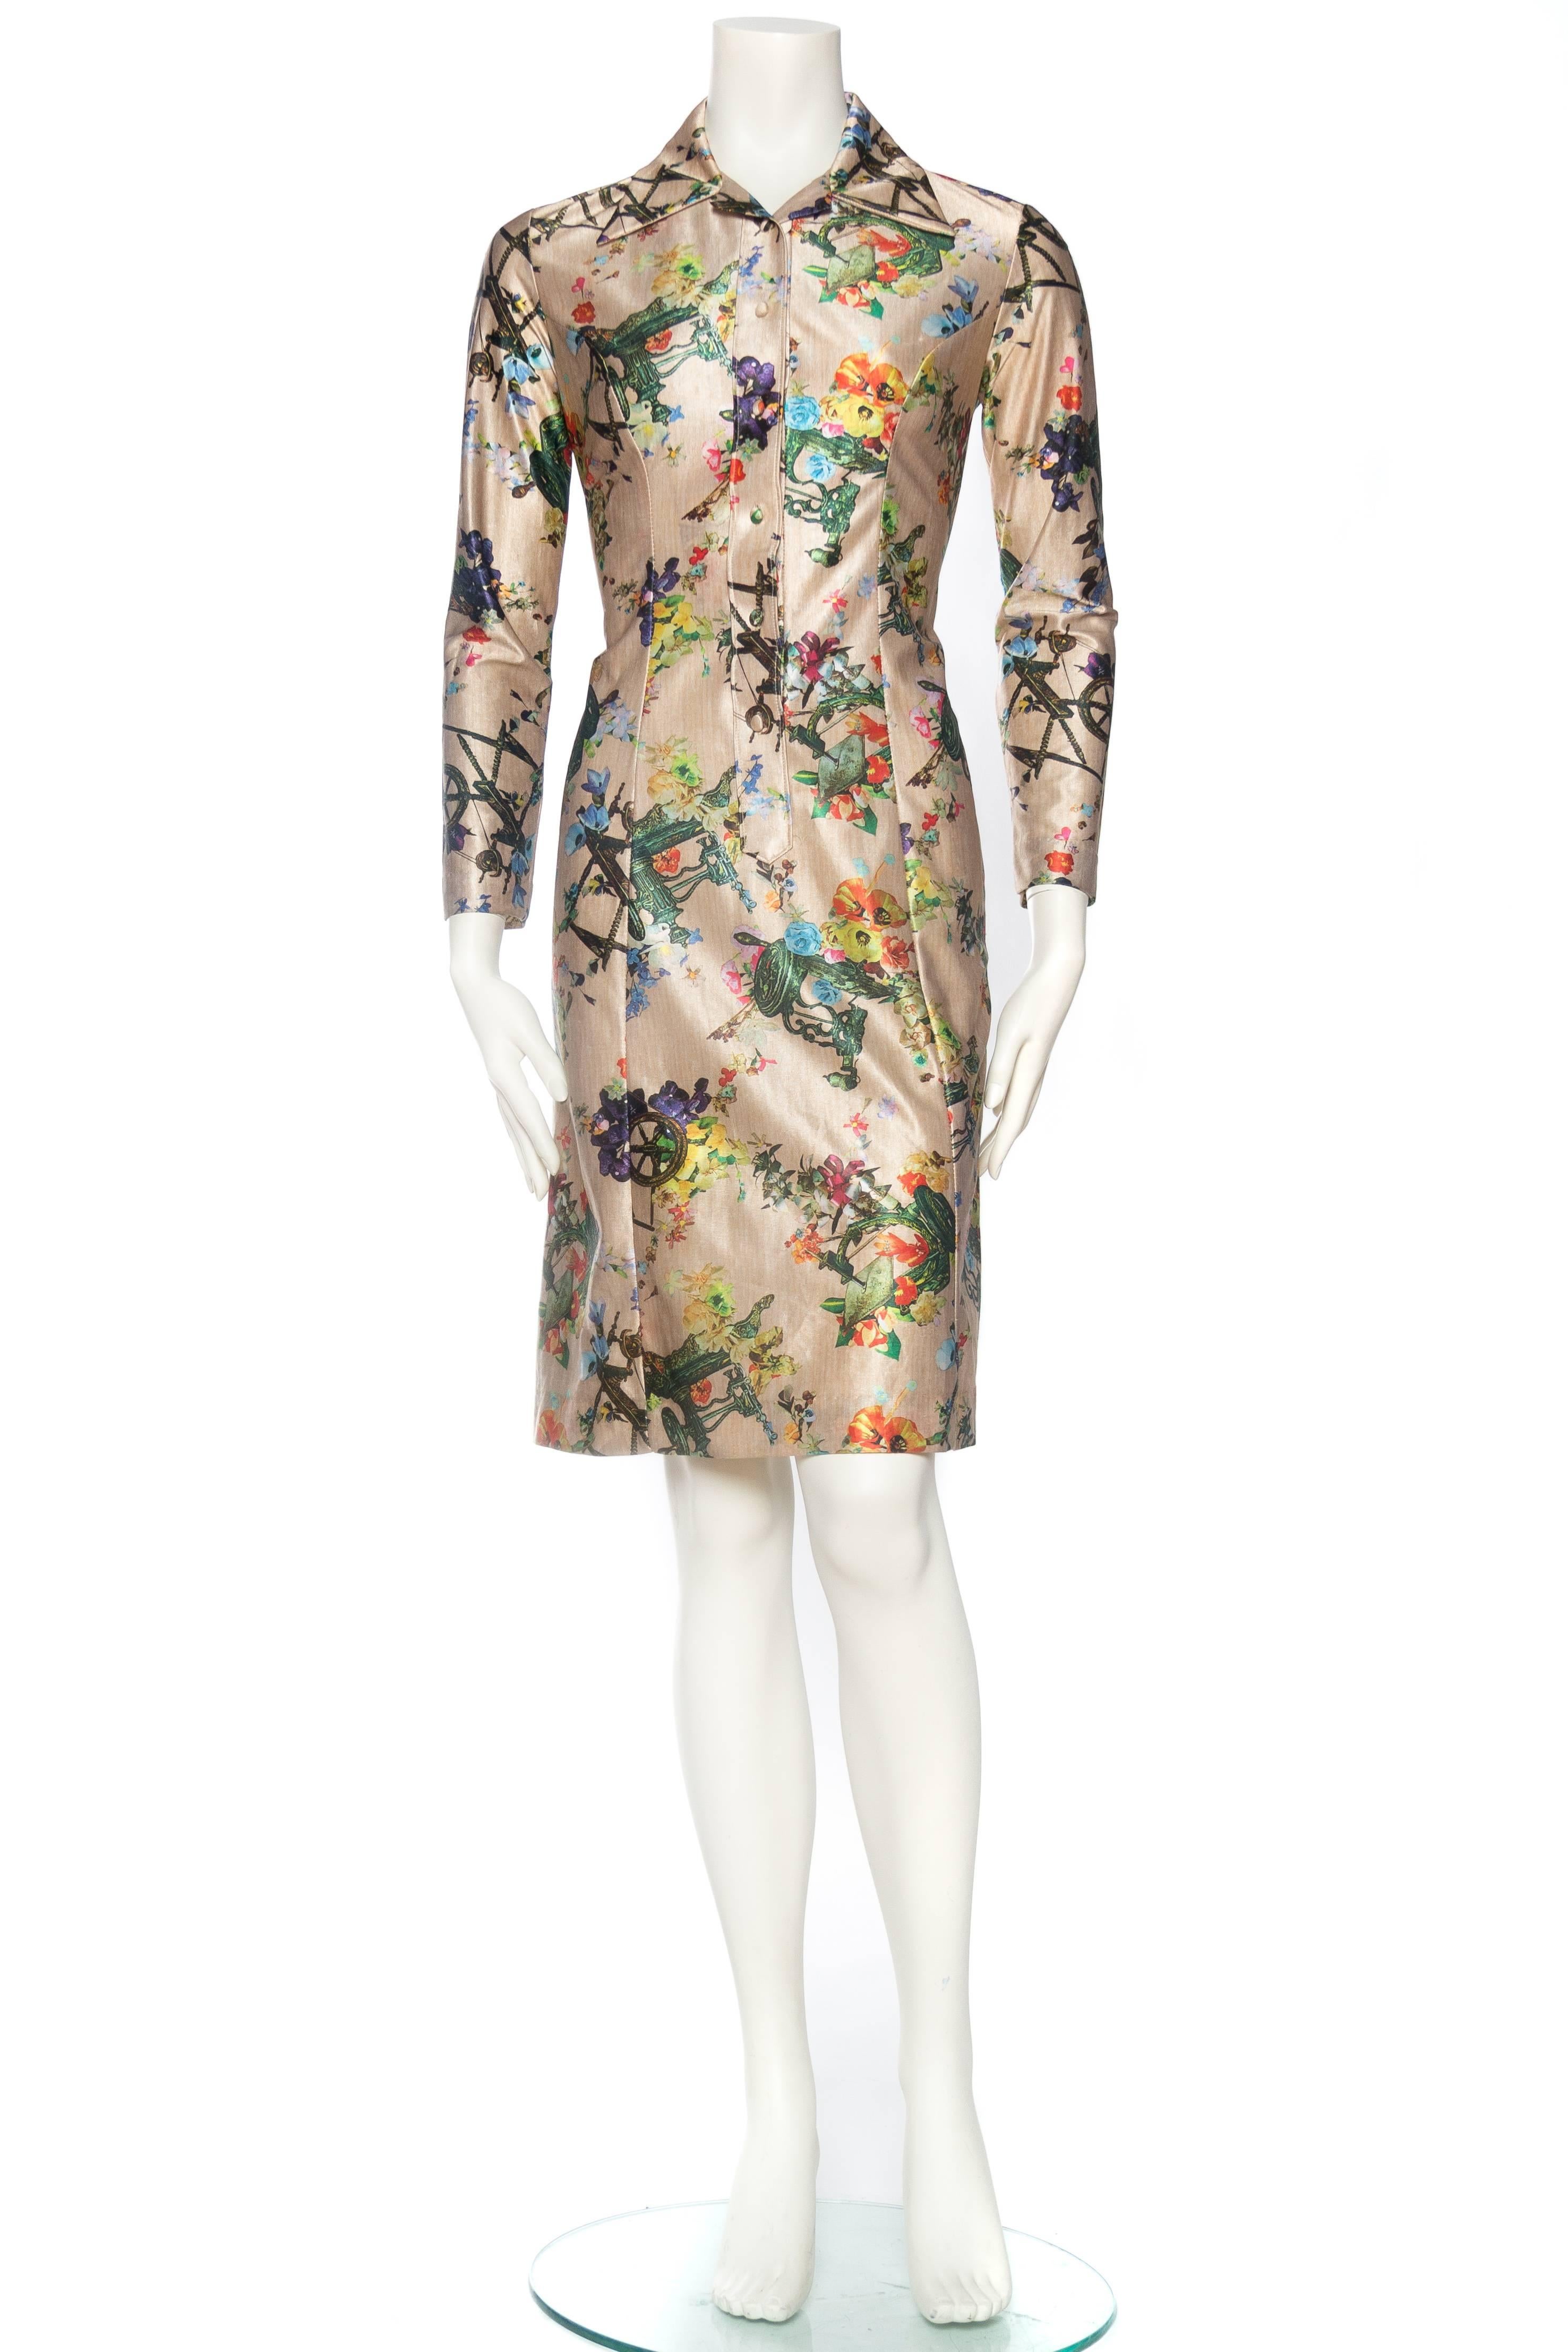 1970s Lanvin Printed Dress